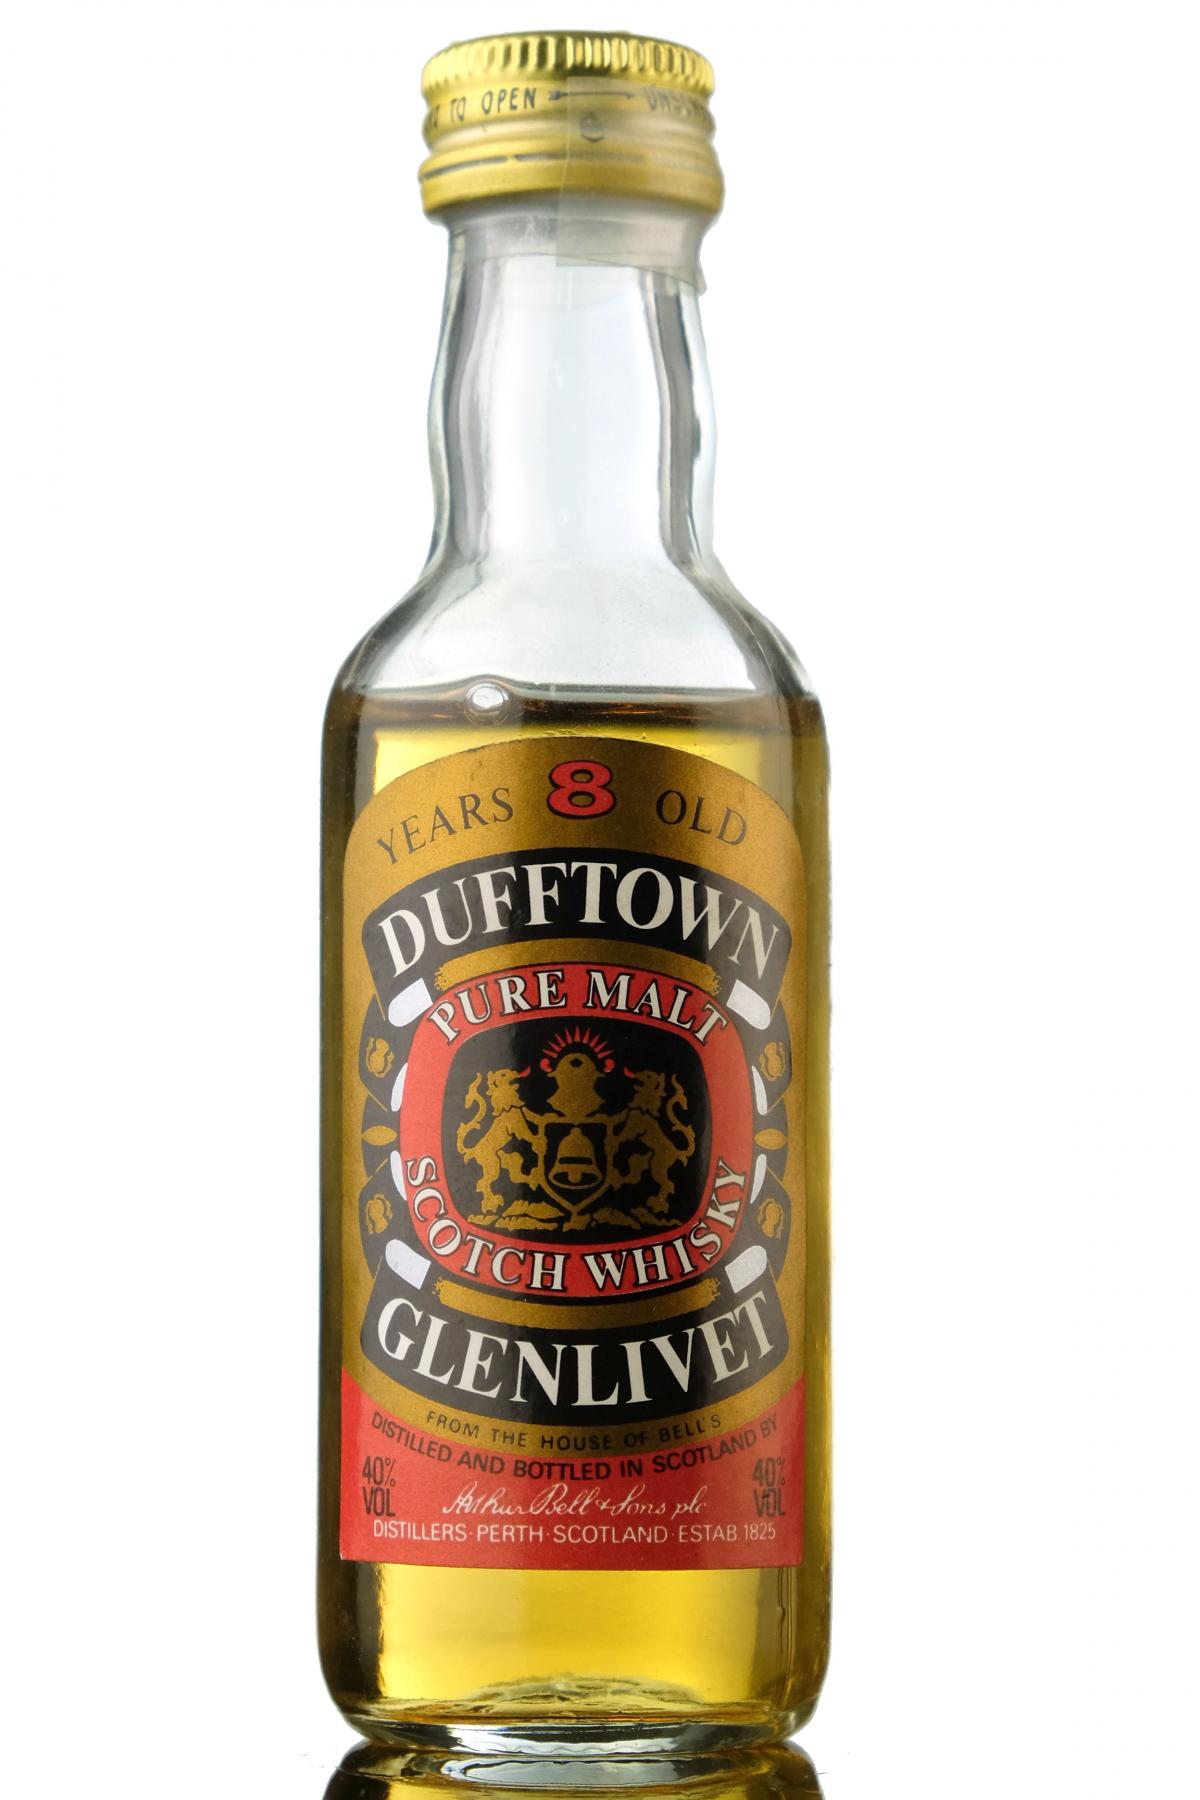 Dufftown-Glenlivet 8 Year Old Miniature